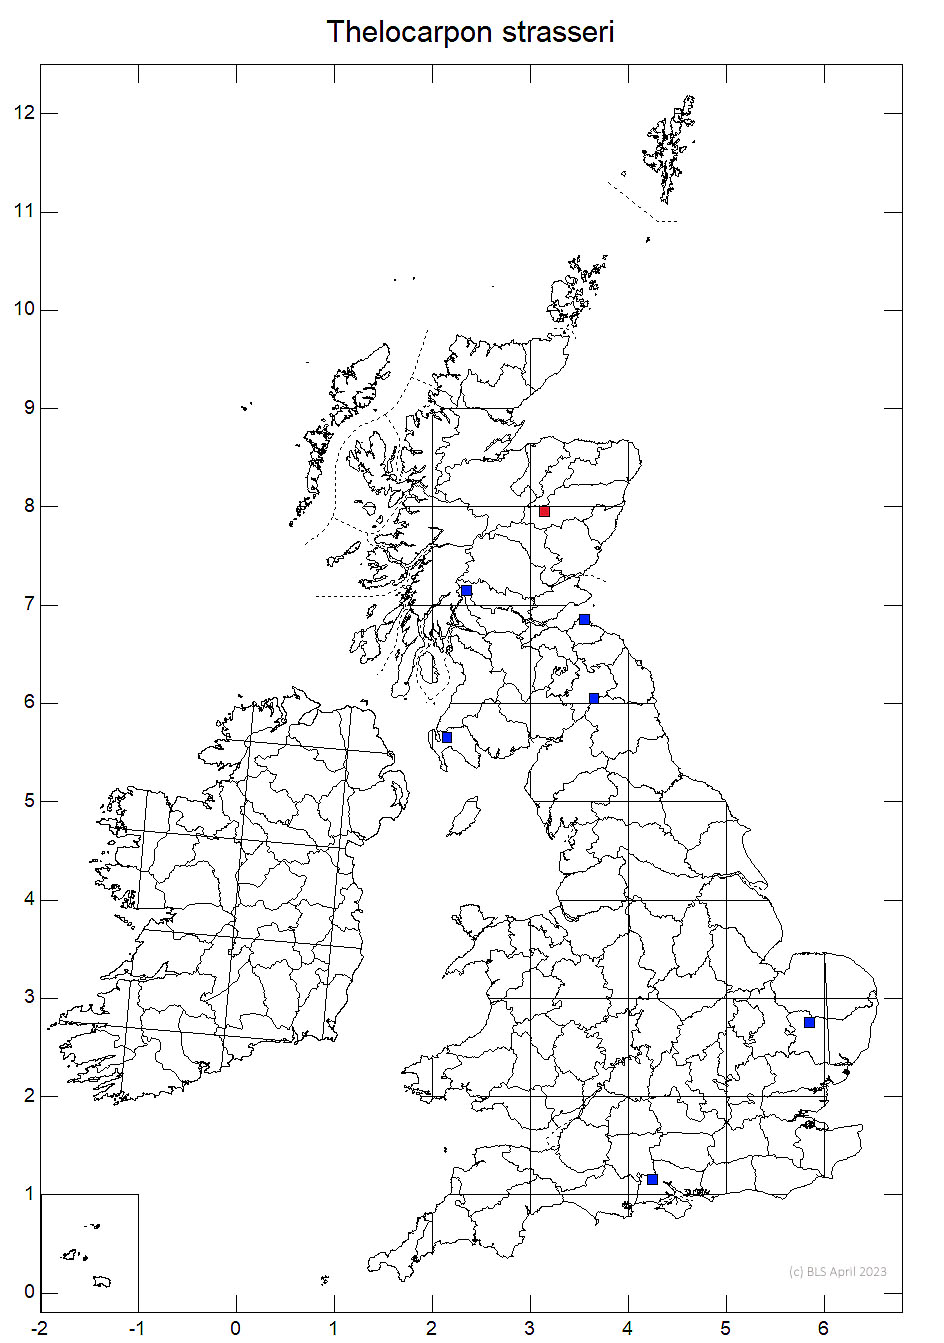 Thelocarpon strasseri 10km sq distribution map